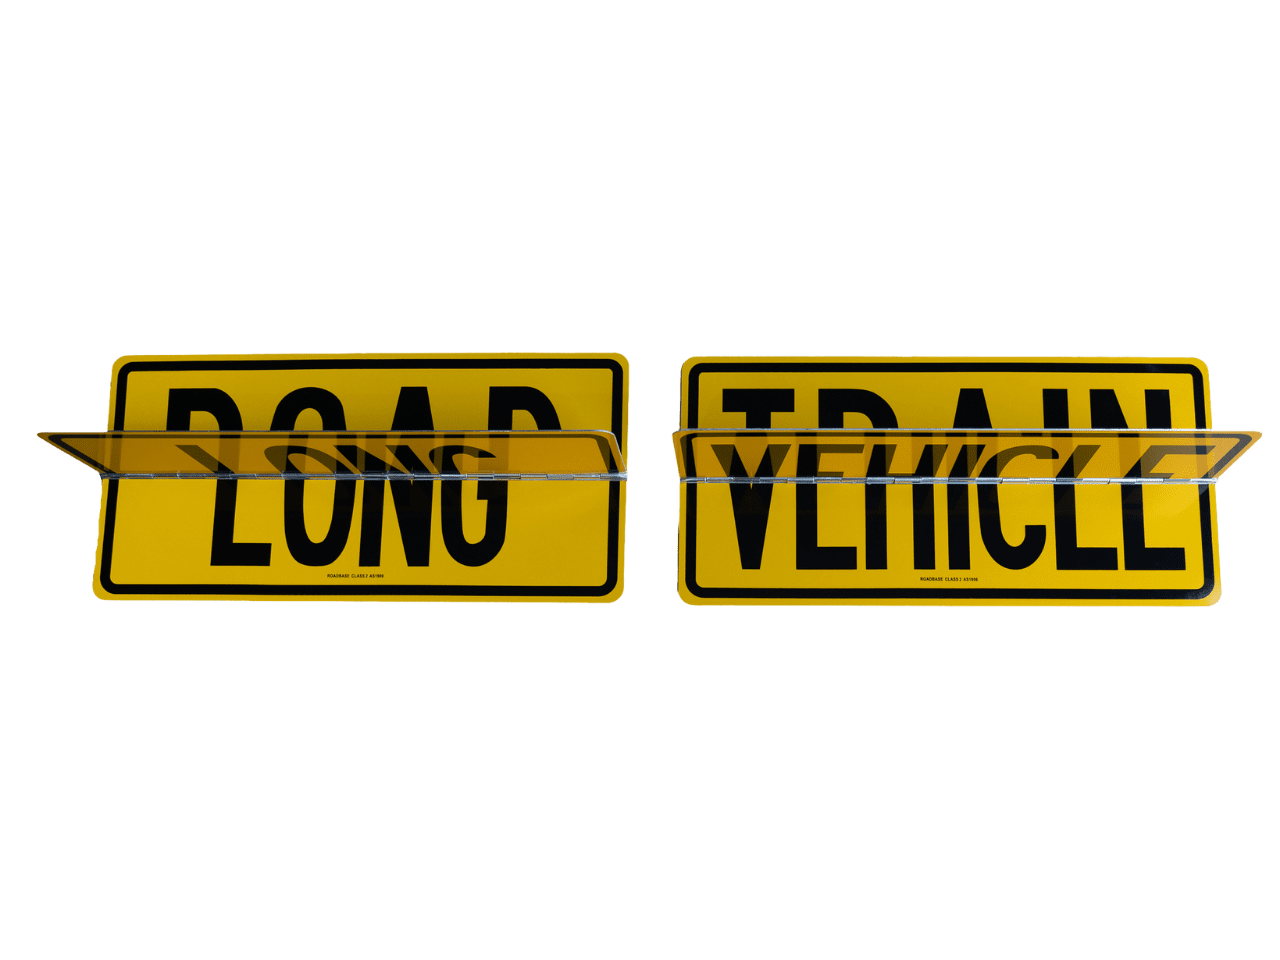 Long Vehicle & Road Train Metal Flip Sign